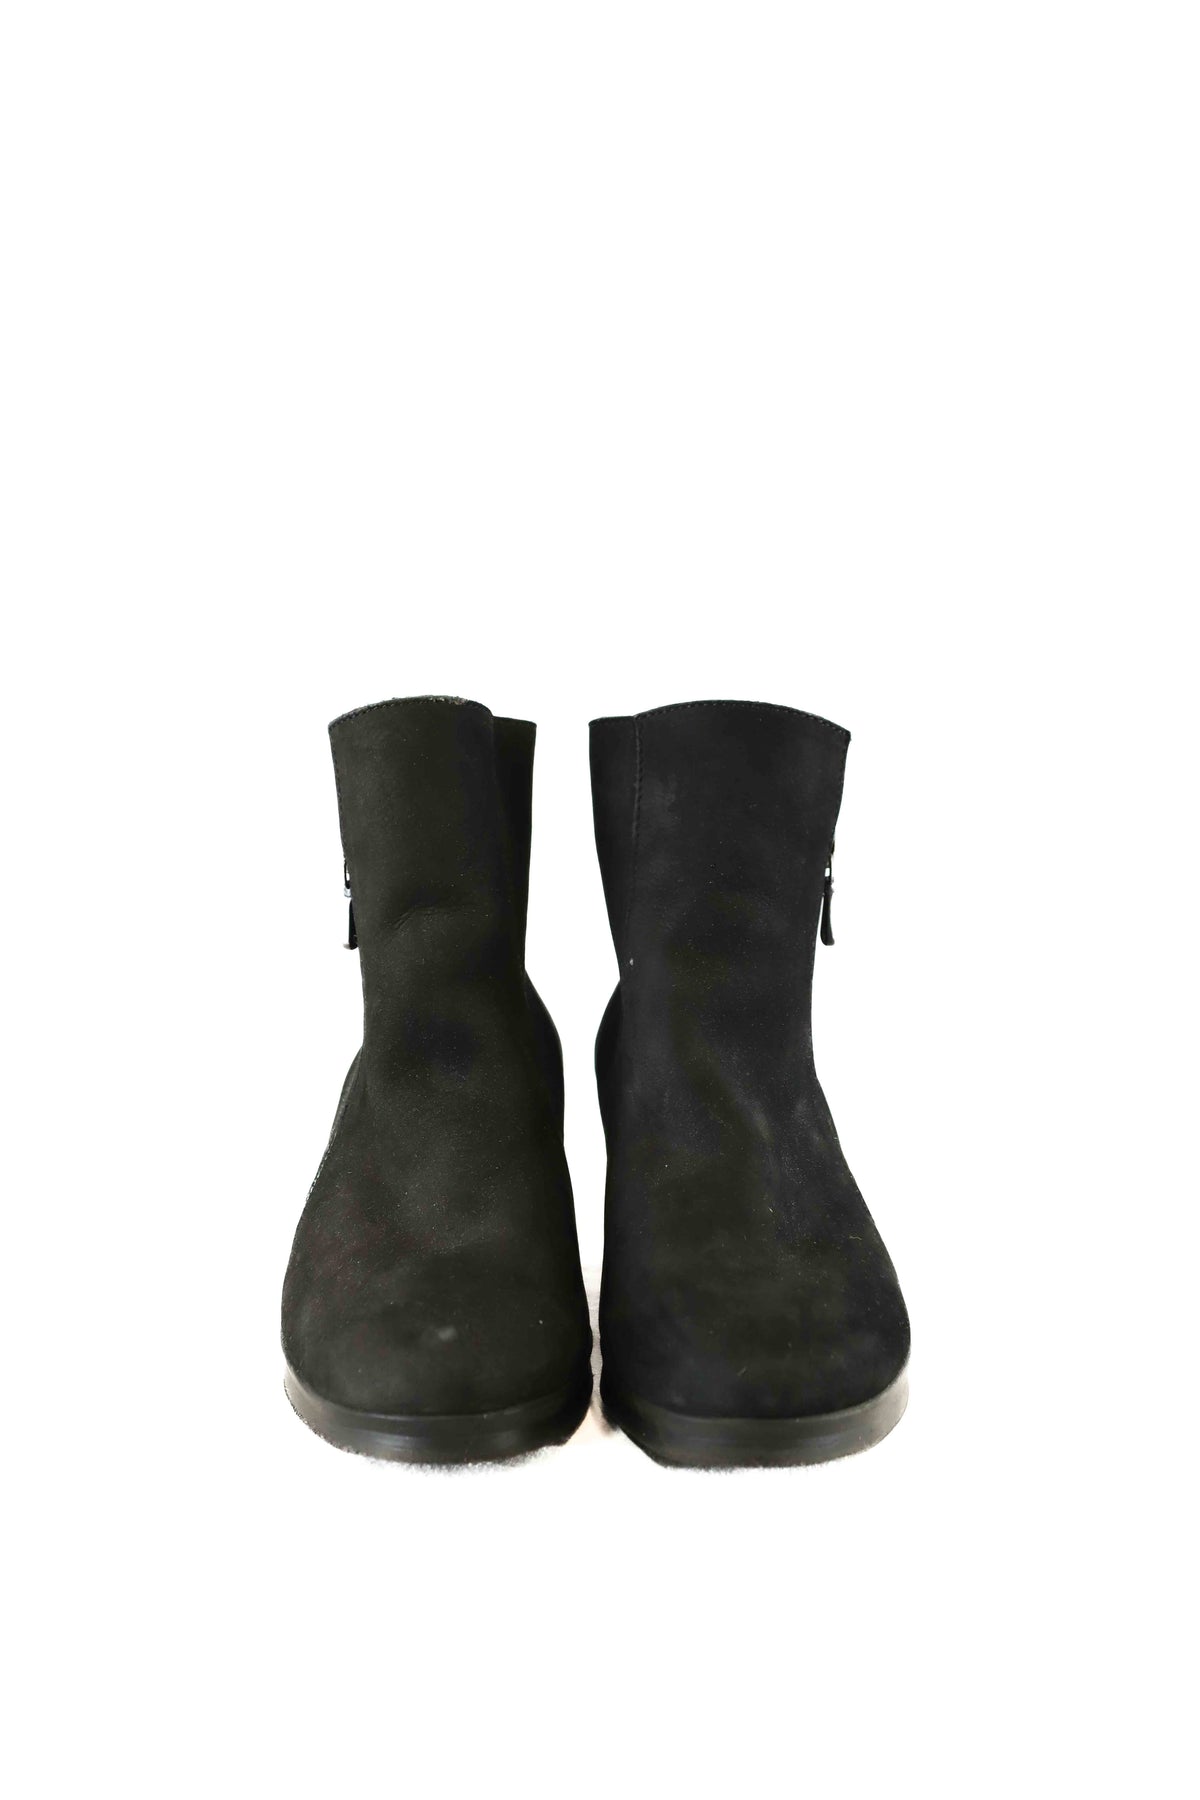 Arche Black Boots 7